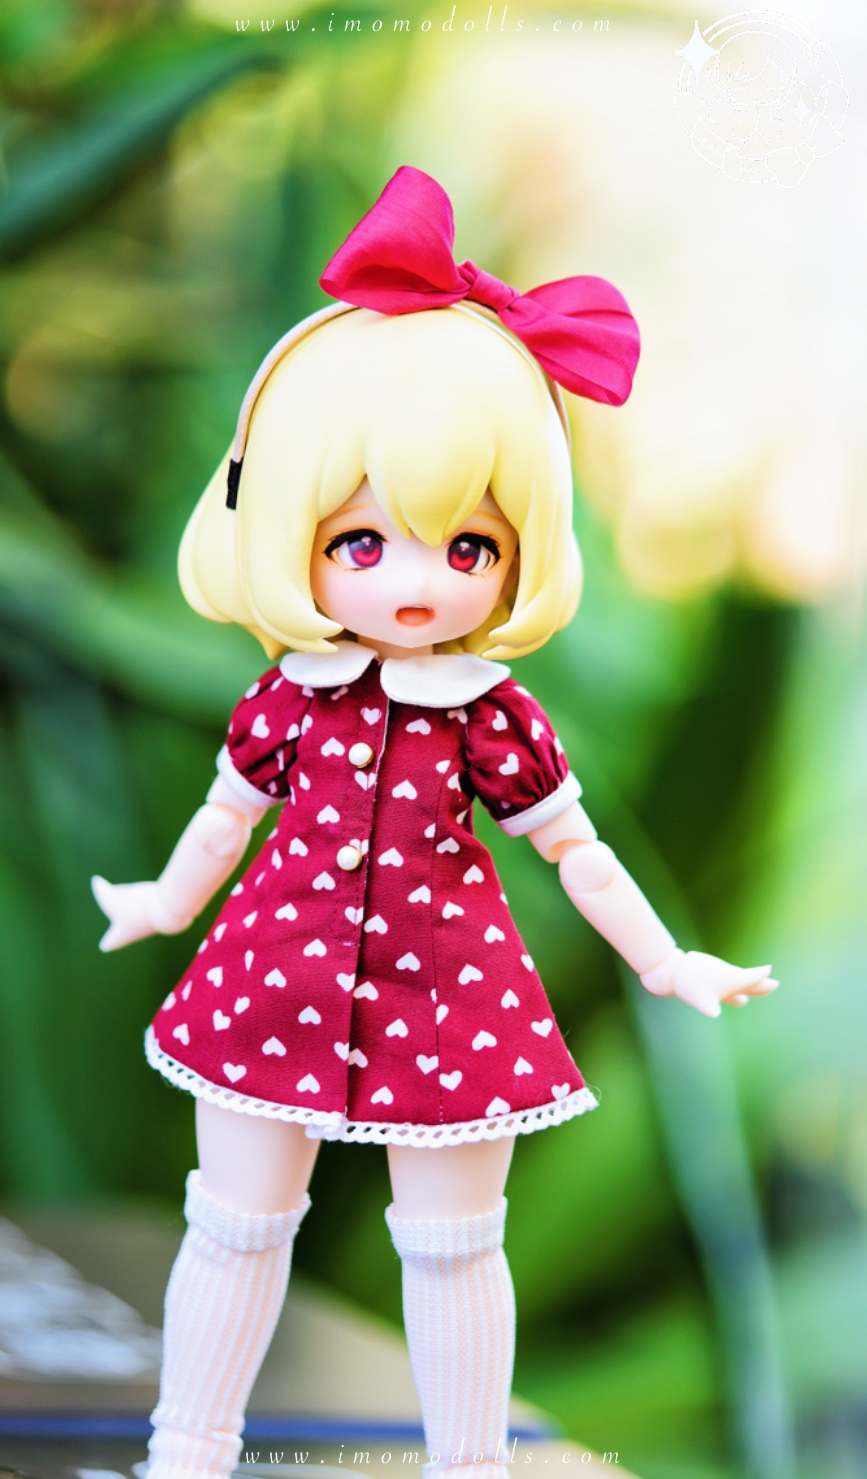 Honey rainbow doll leternite 韓国ドール 美品